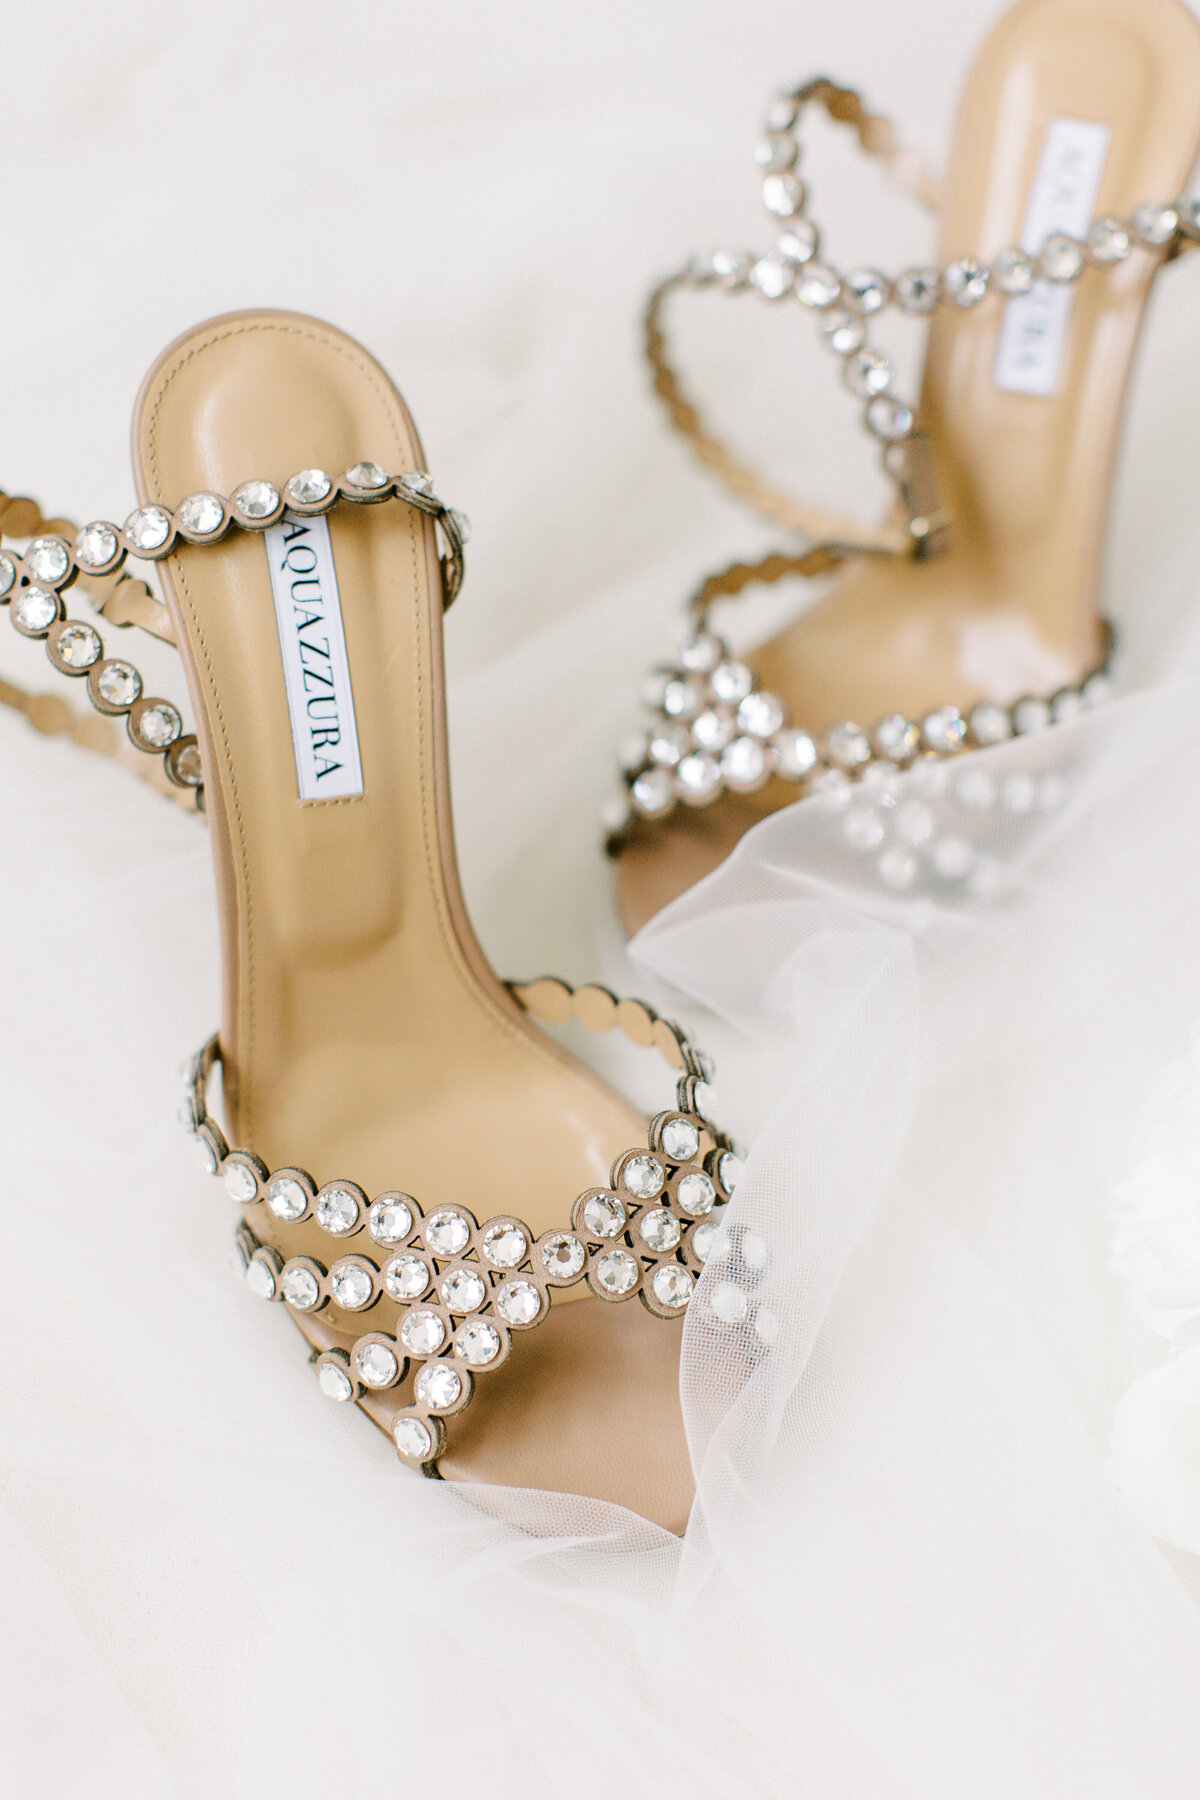 shoes-for-bride-sarah-brehant-events